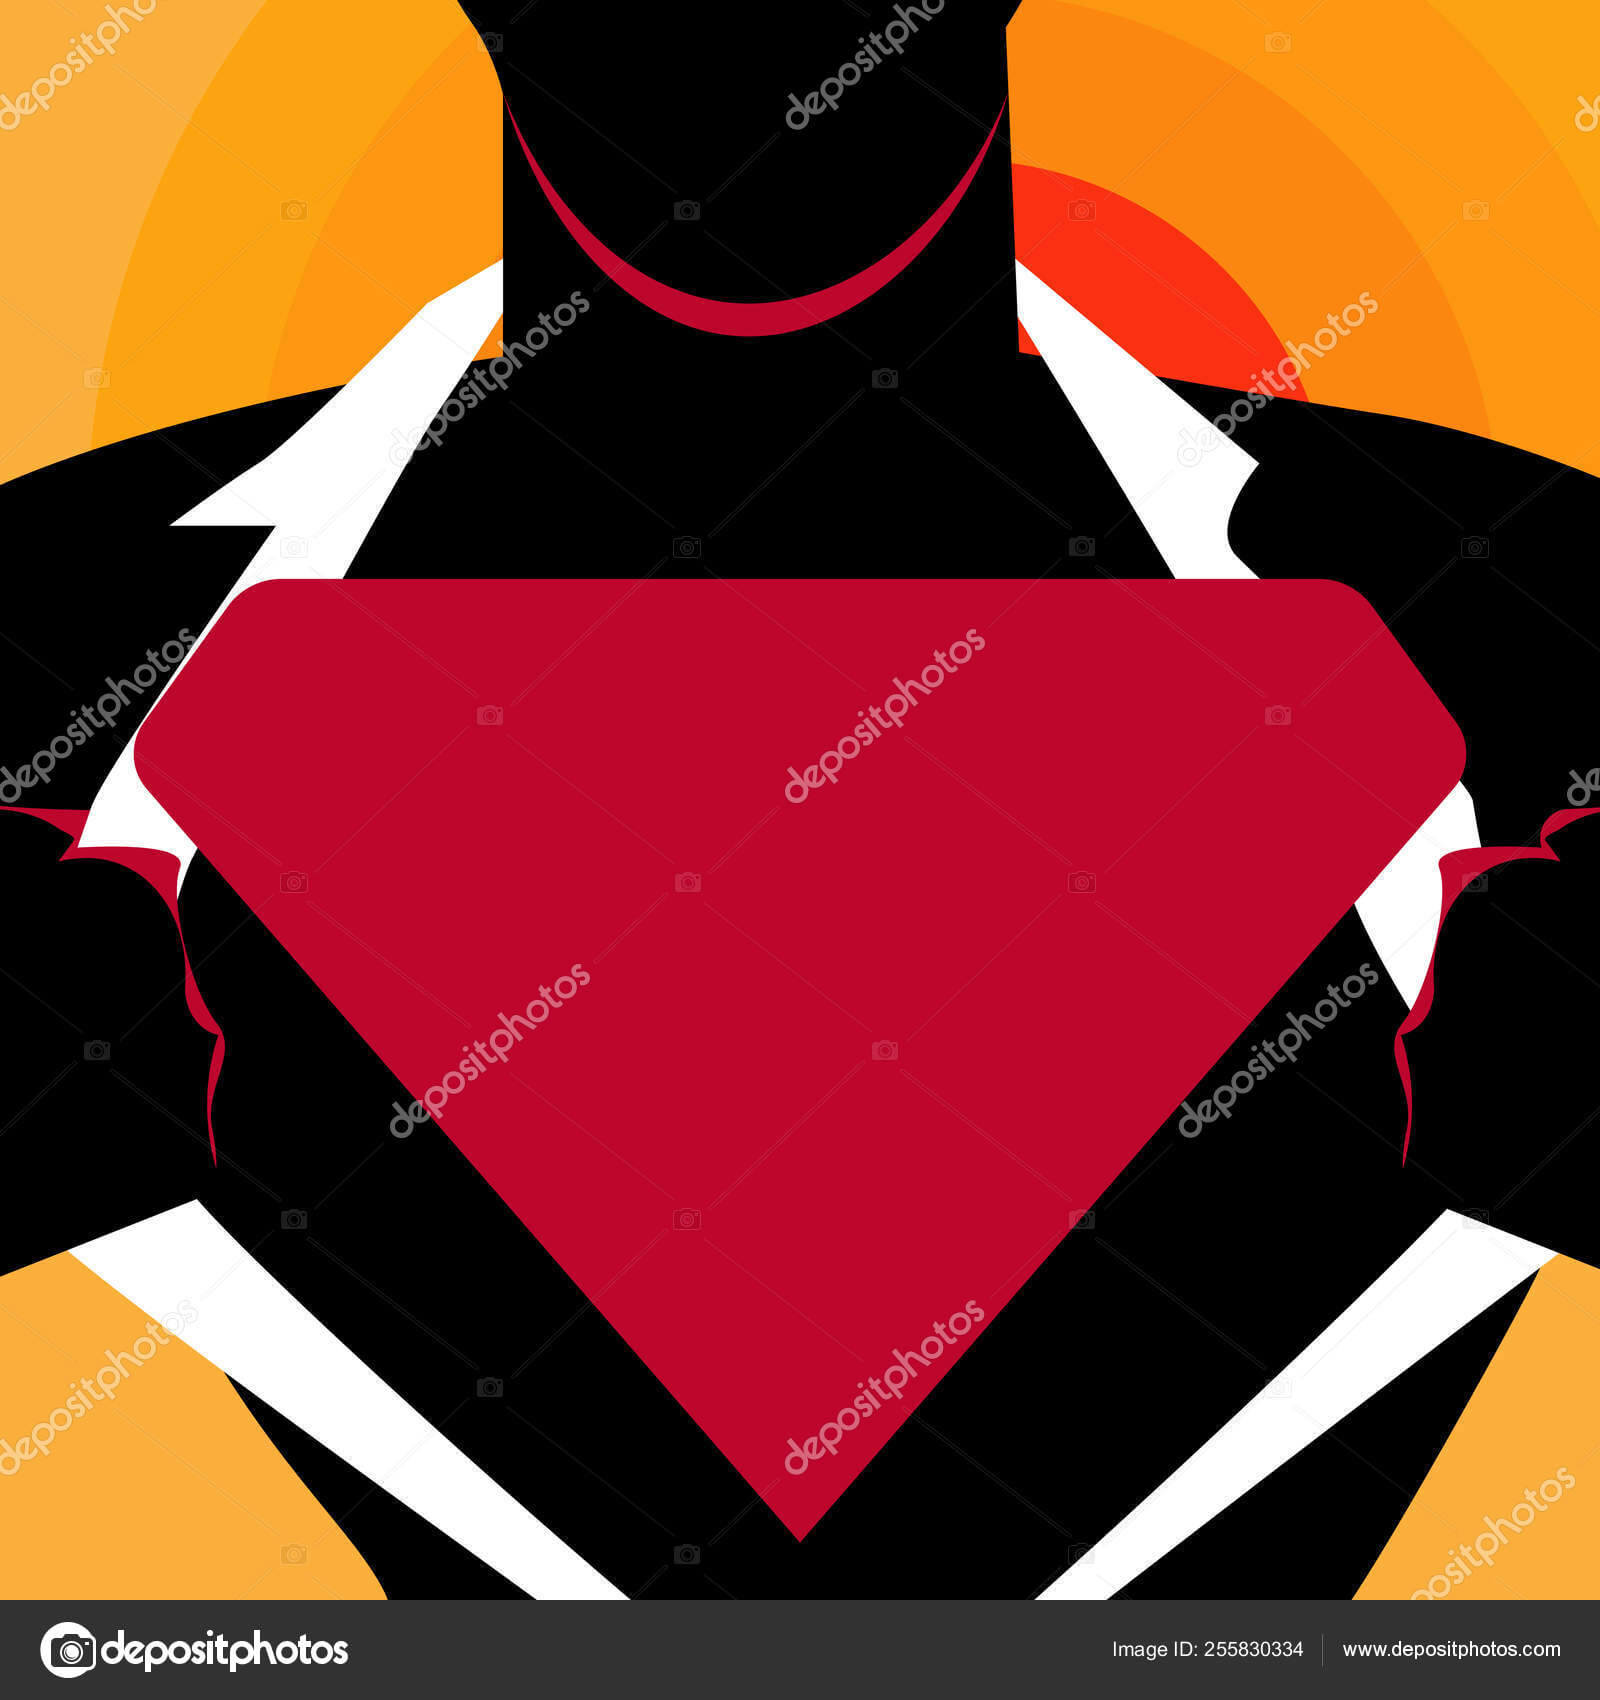 Man In Superman Pose Opening Shirt To Reveal Blank Throughout Blank Superman Logo Template